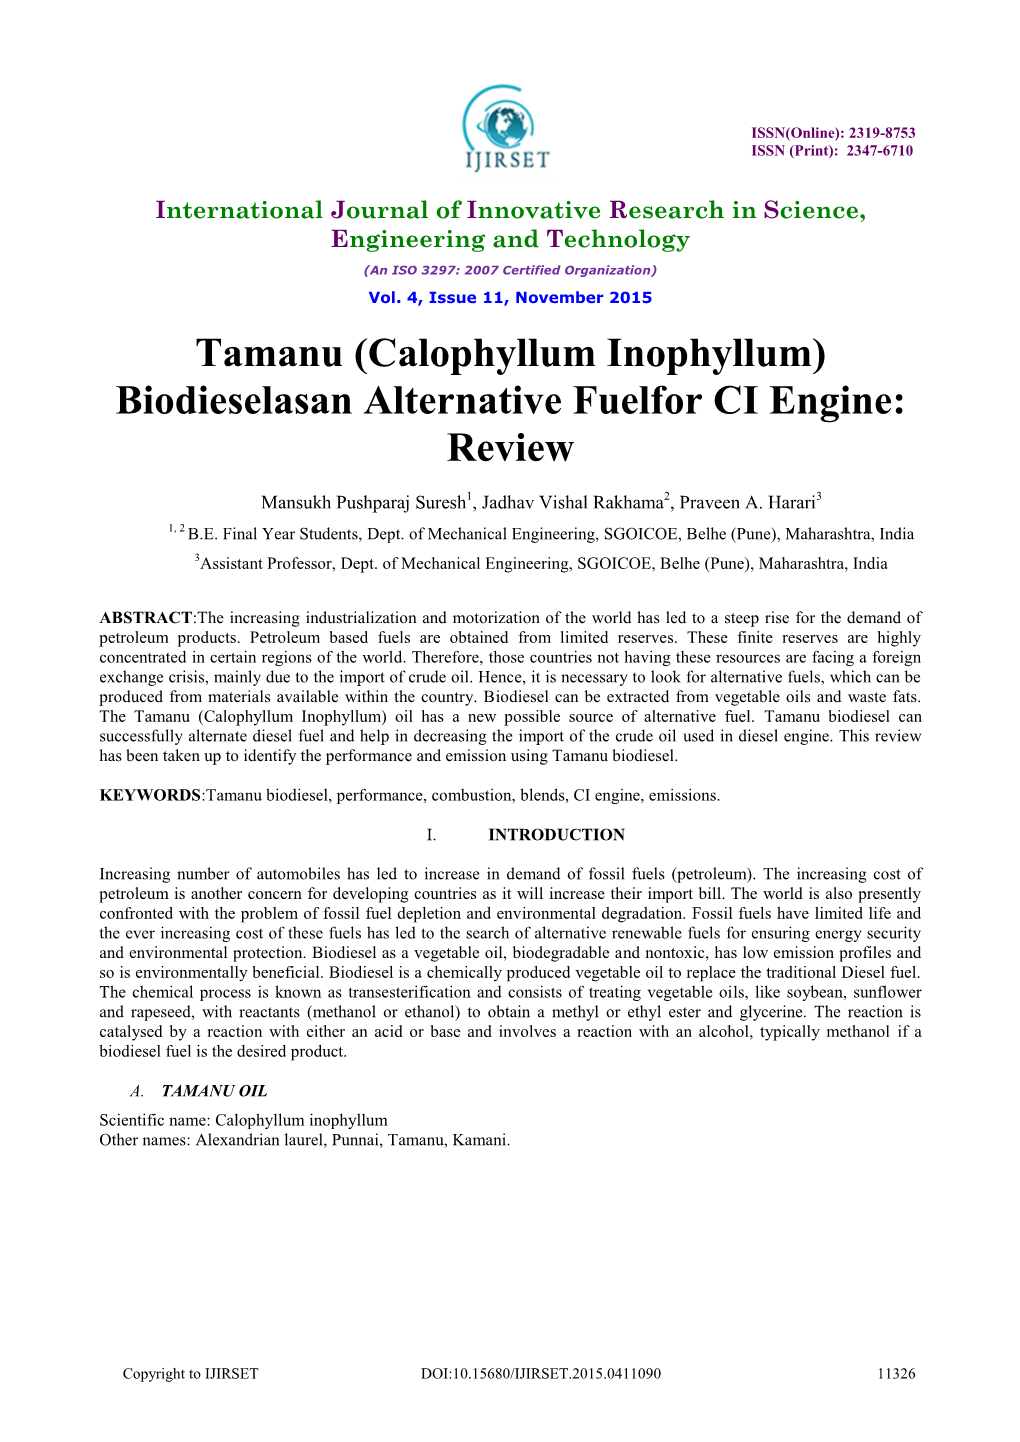 Tamanu (Calophyllum Inophyllum) Biodieselasan Alternative Fuelfor CI Engine: Review